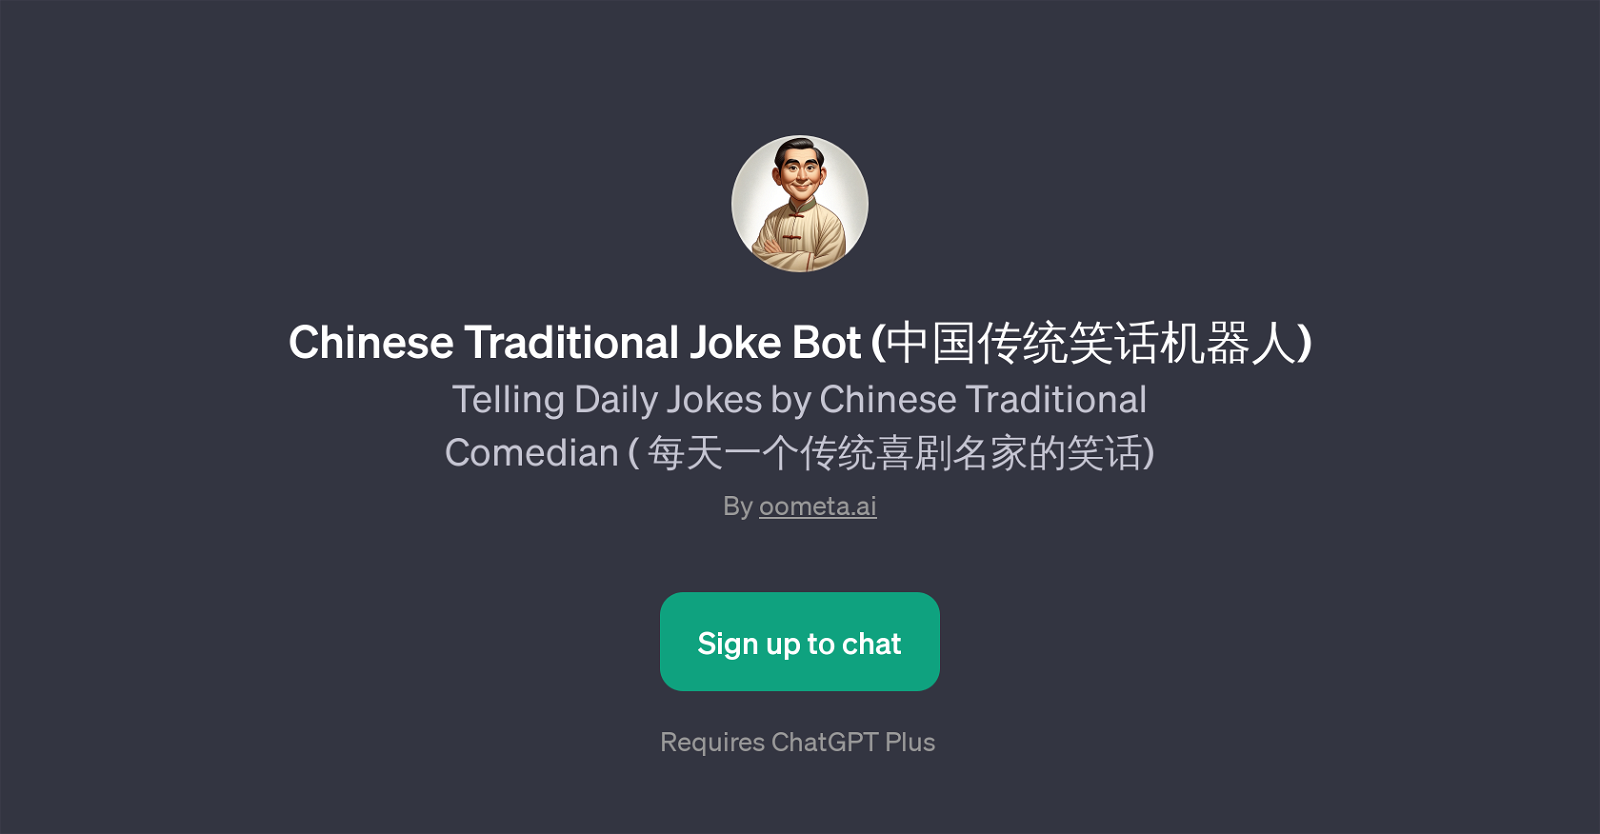 Chinese Traditional Joke Bot website